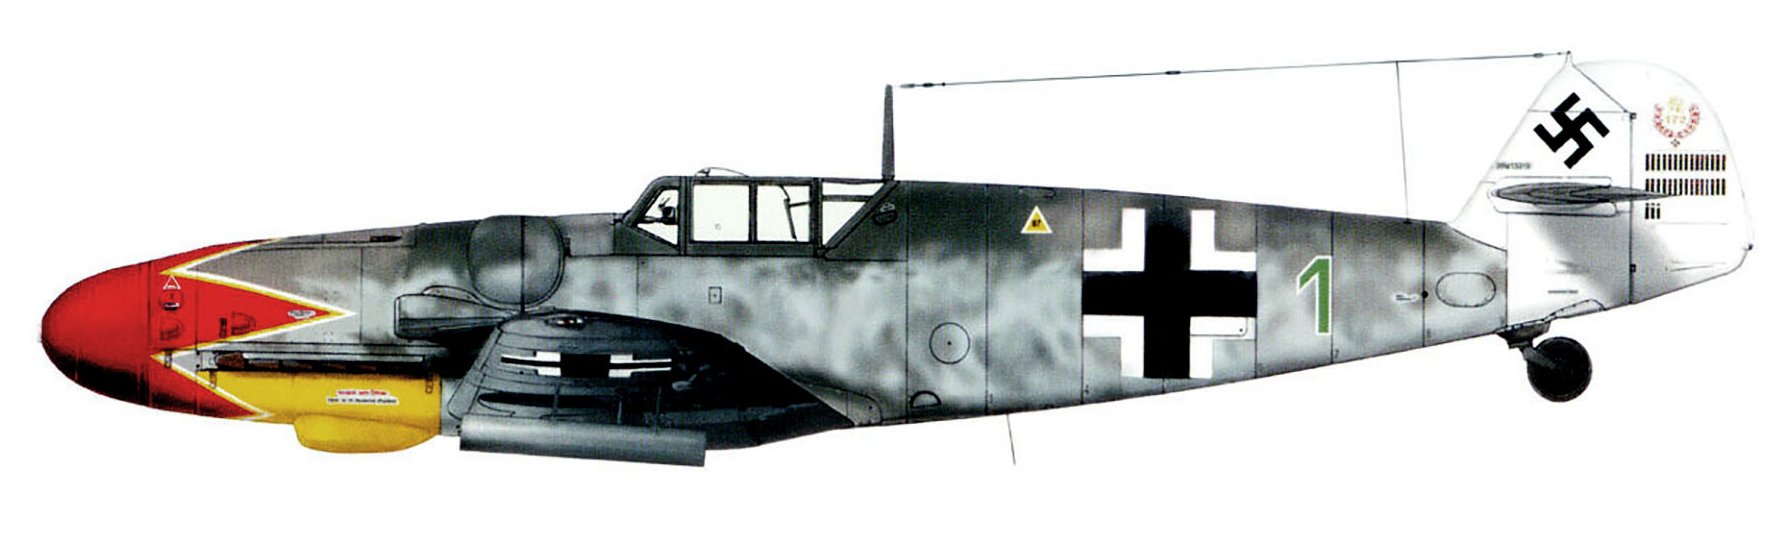 (GB Jicéhem) [AZ Model] Messerschmitt Bf 109G-6 JGr50  1/72 Bf109g69